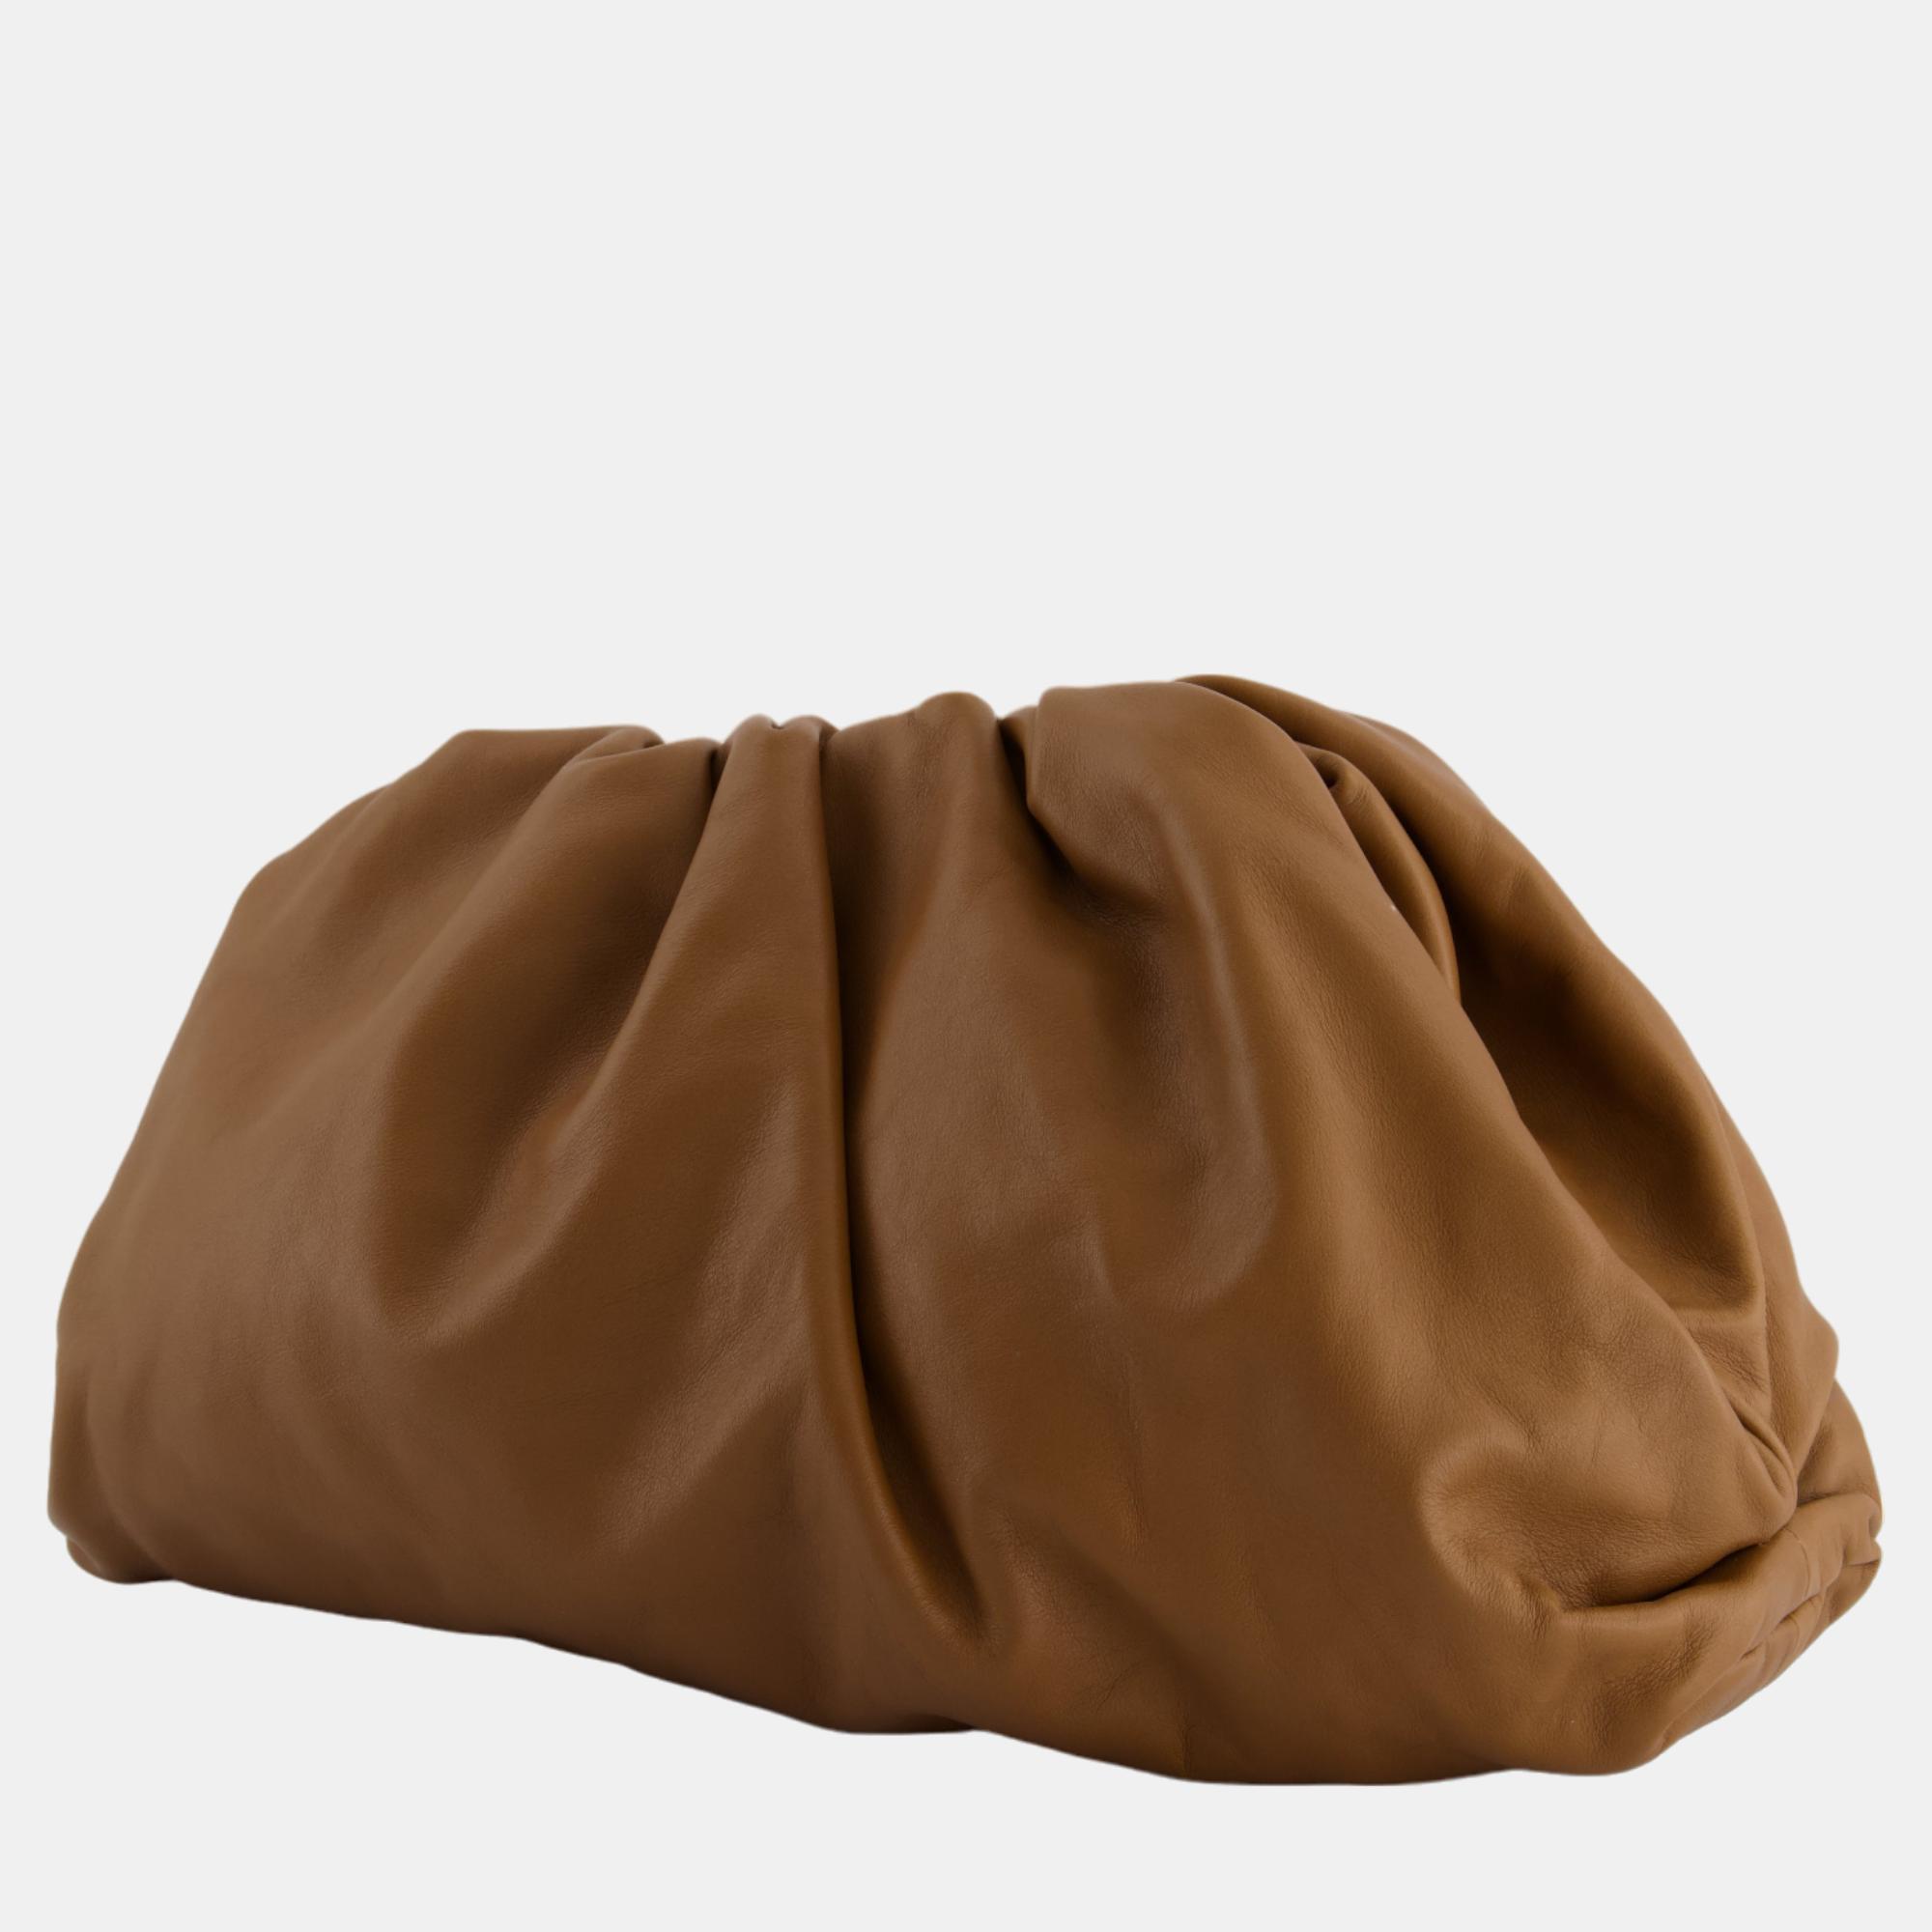 Bottega Veneta Brown Calfskin Leather Large Pouch Bag